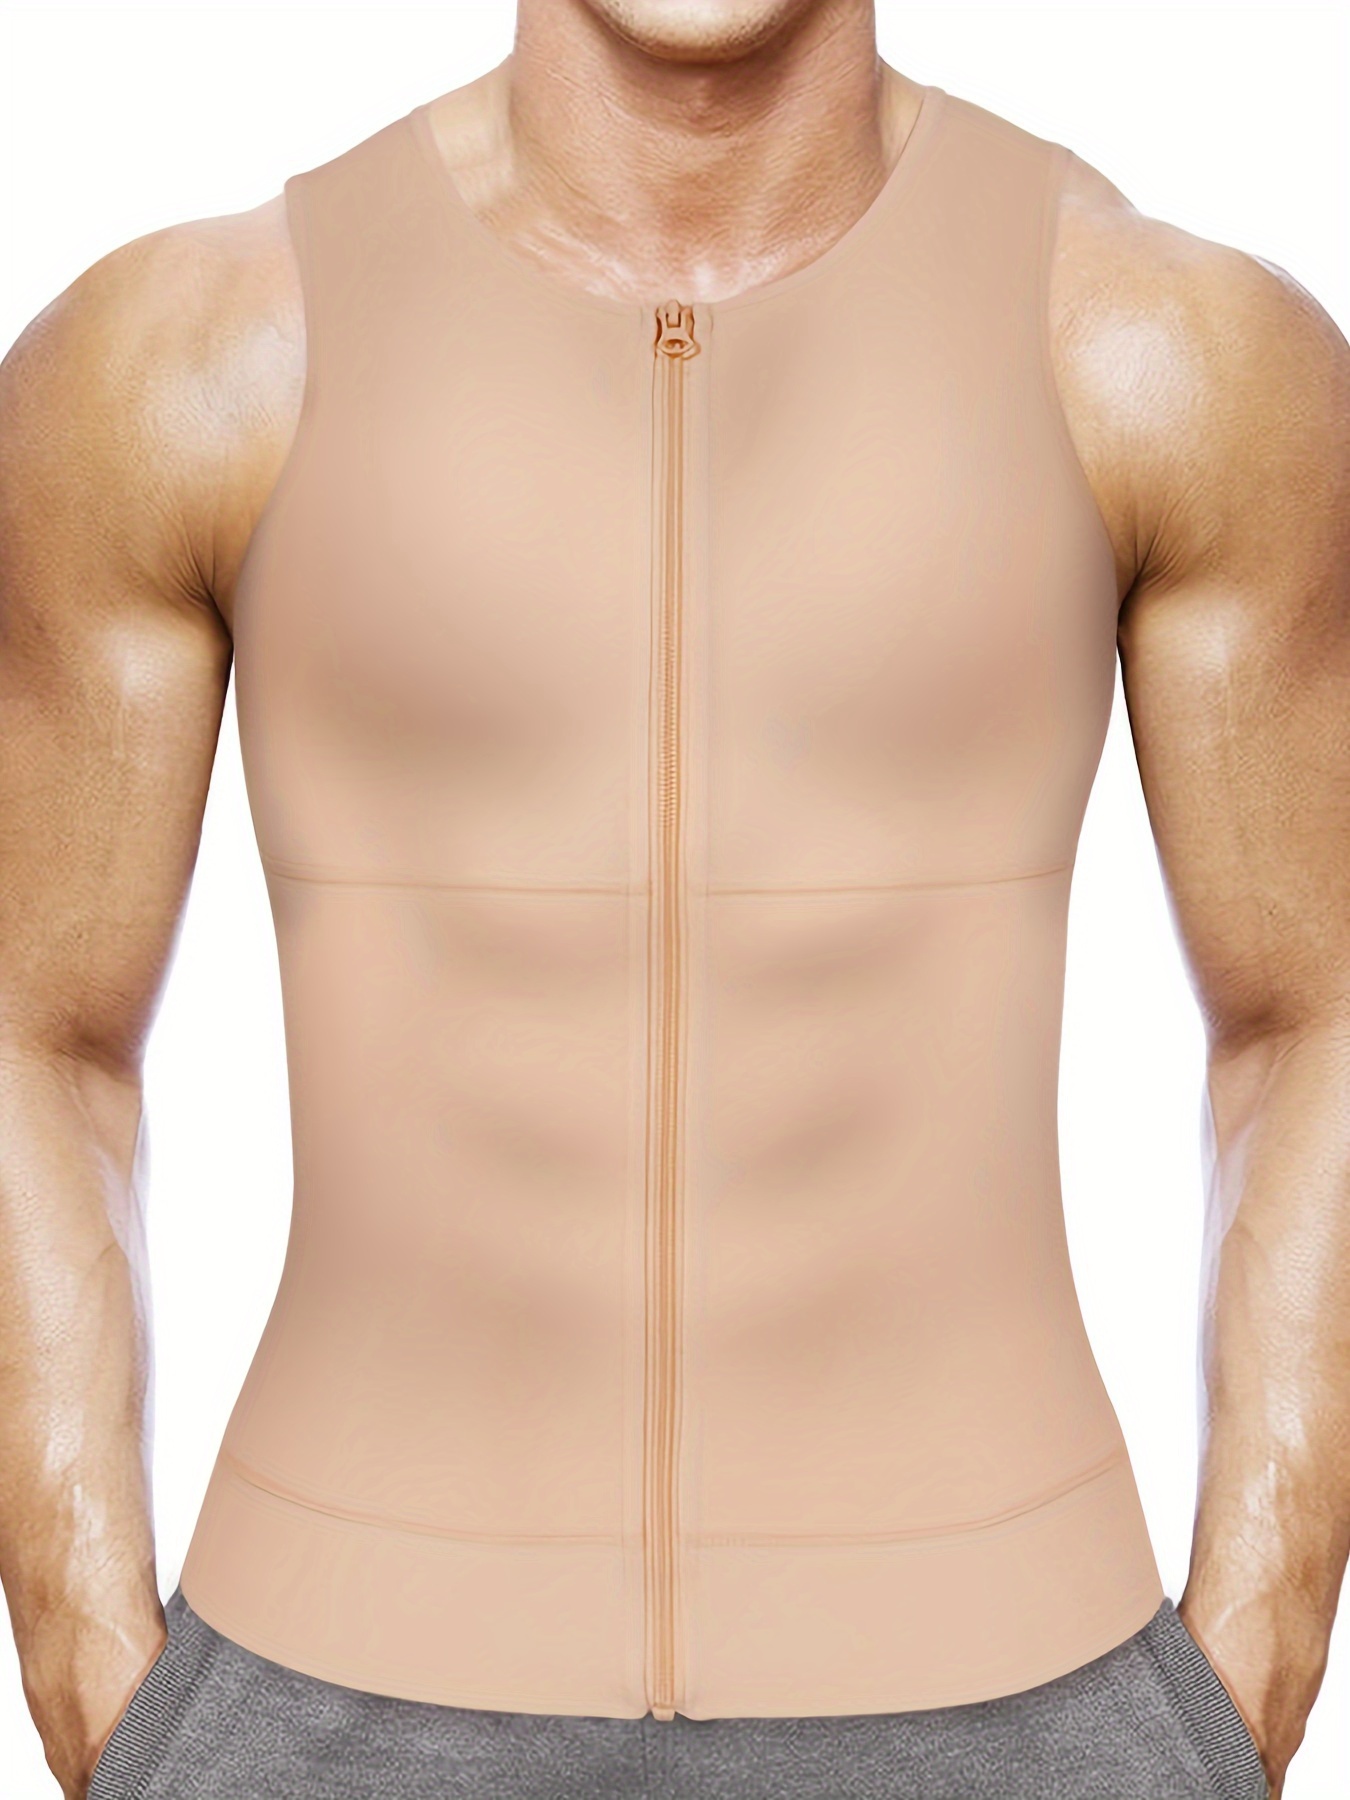 * Men's Compression Shirt Tank Top With Zipper, Body Shapewear For Men